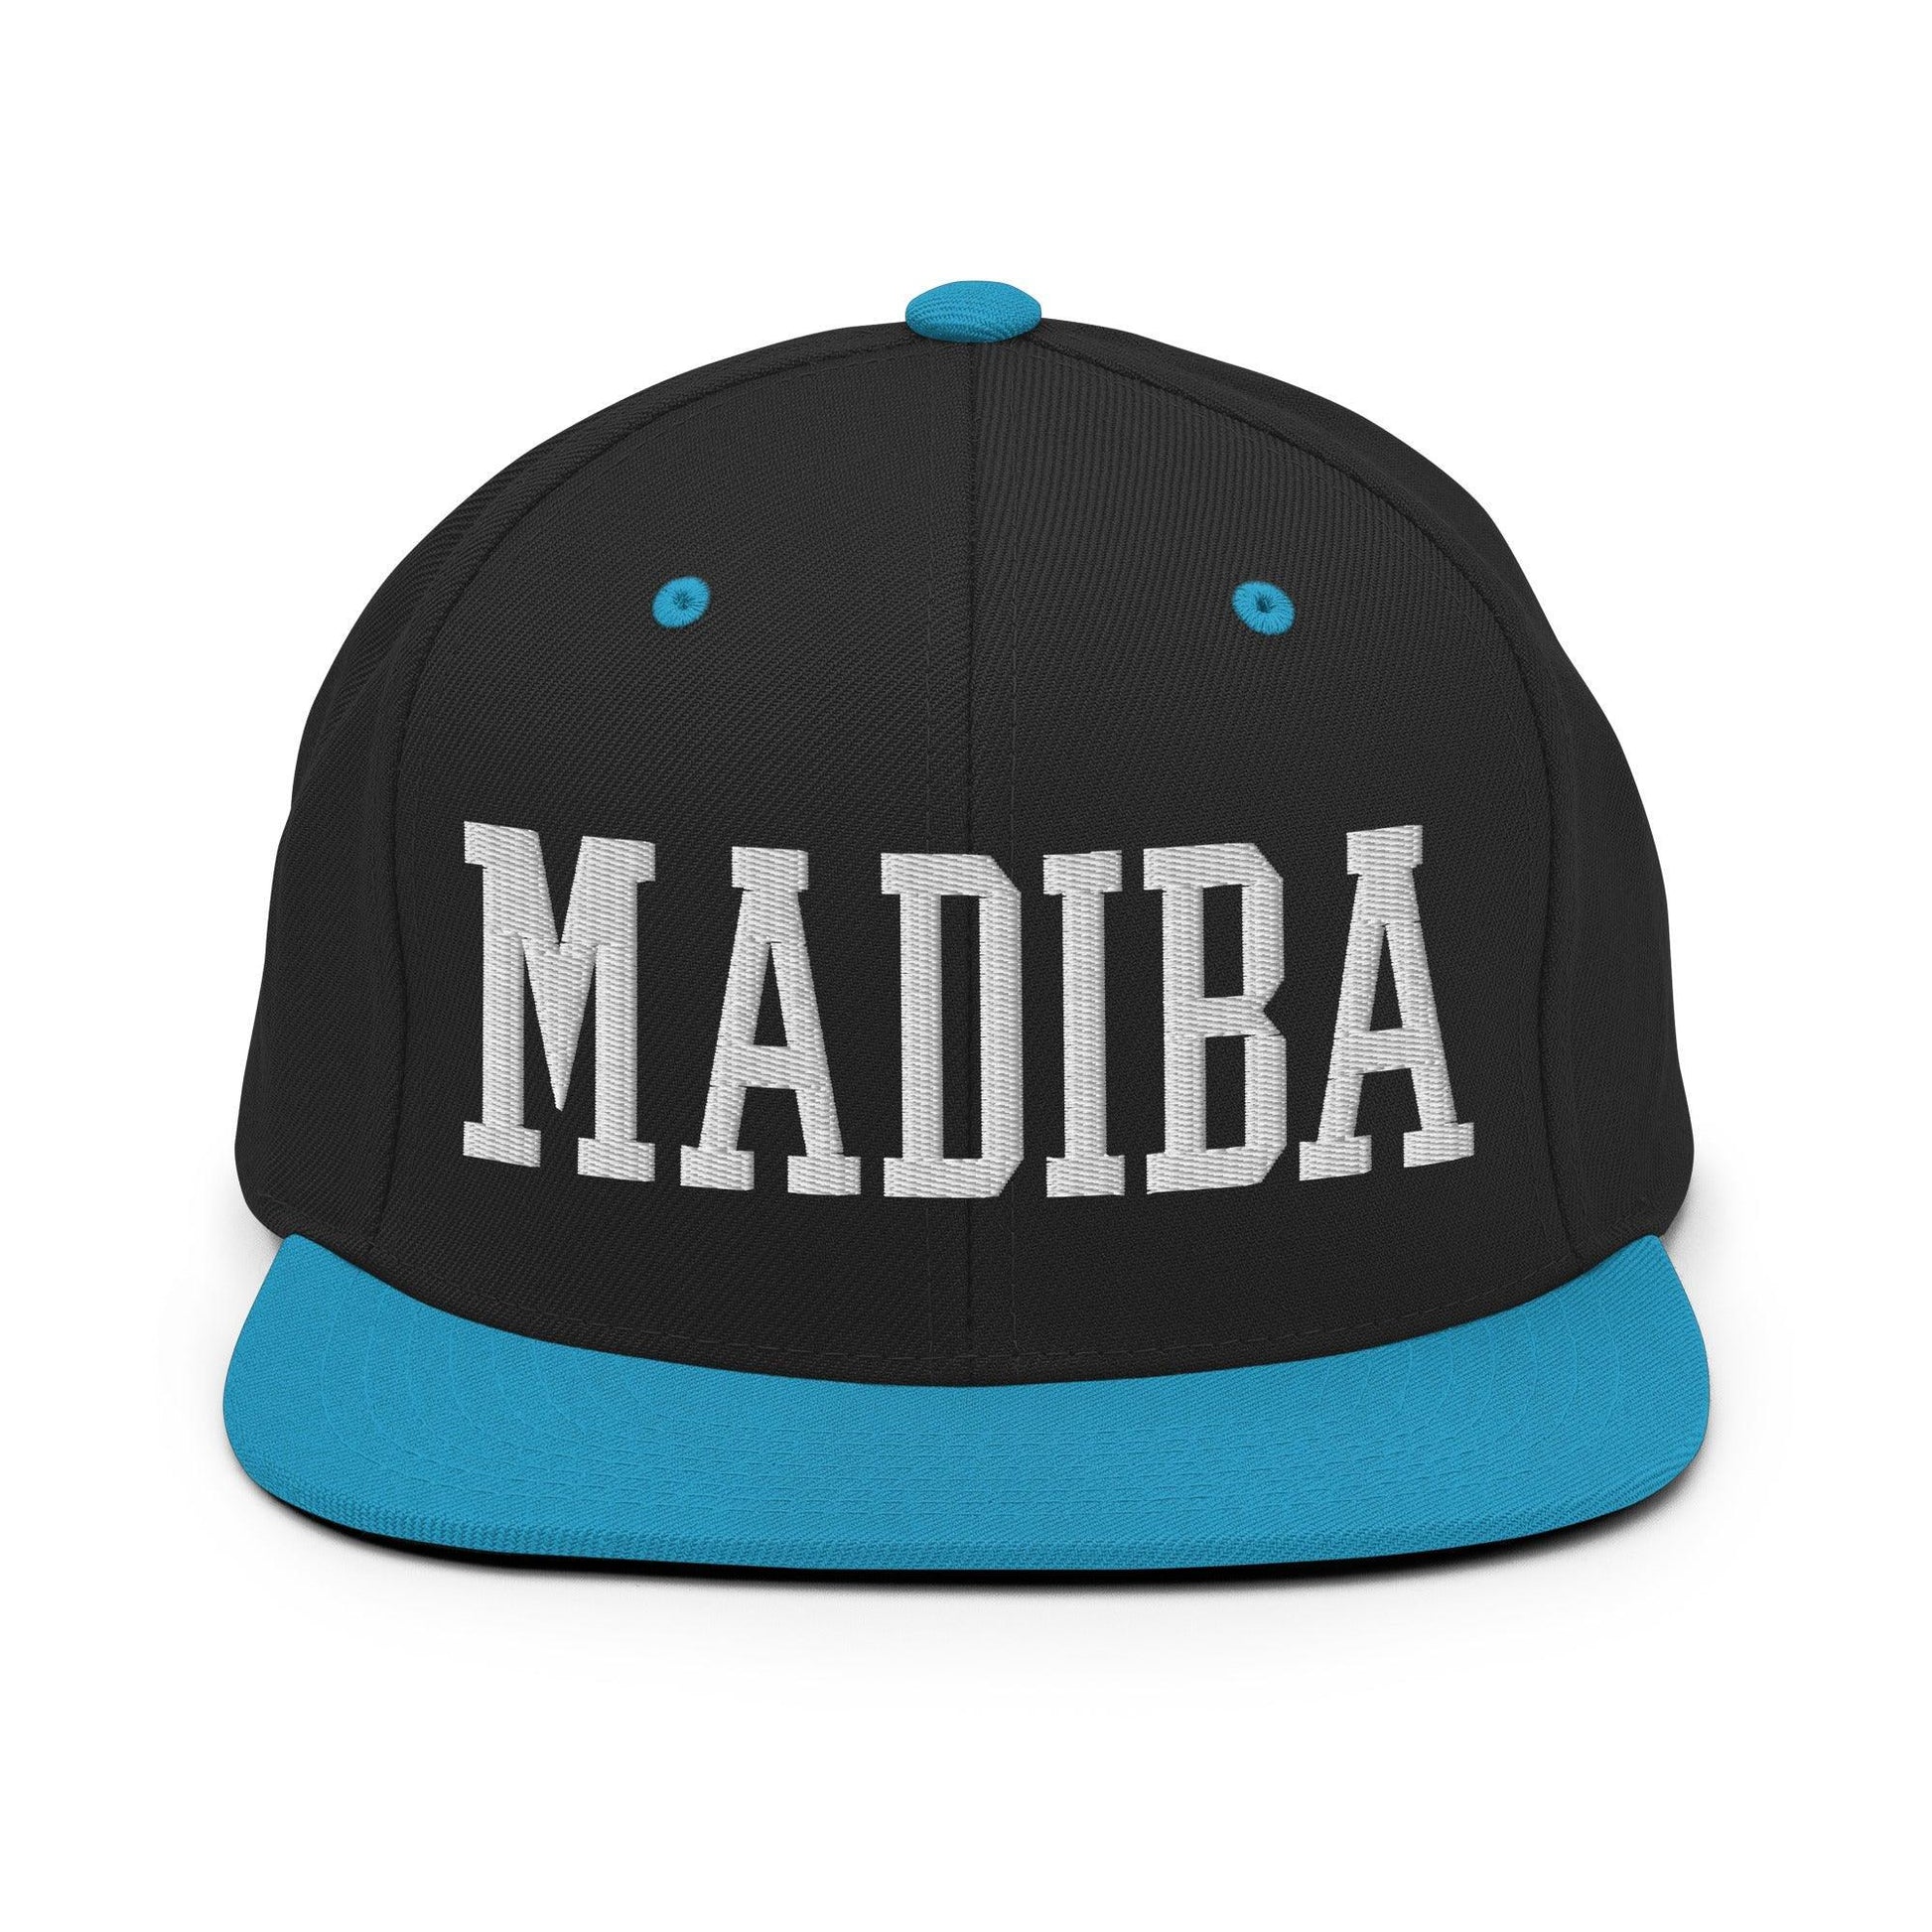 Nelson Mandela Madiba Block Snapback Hat Black/ Teal